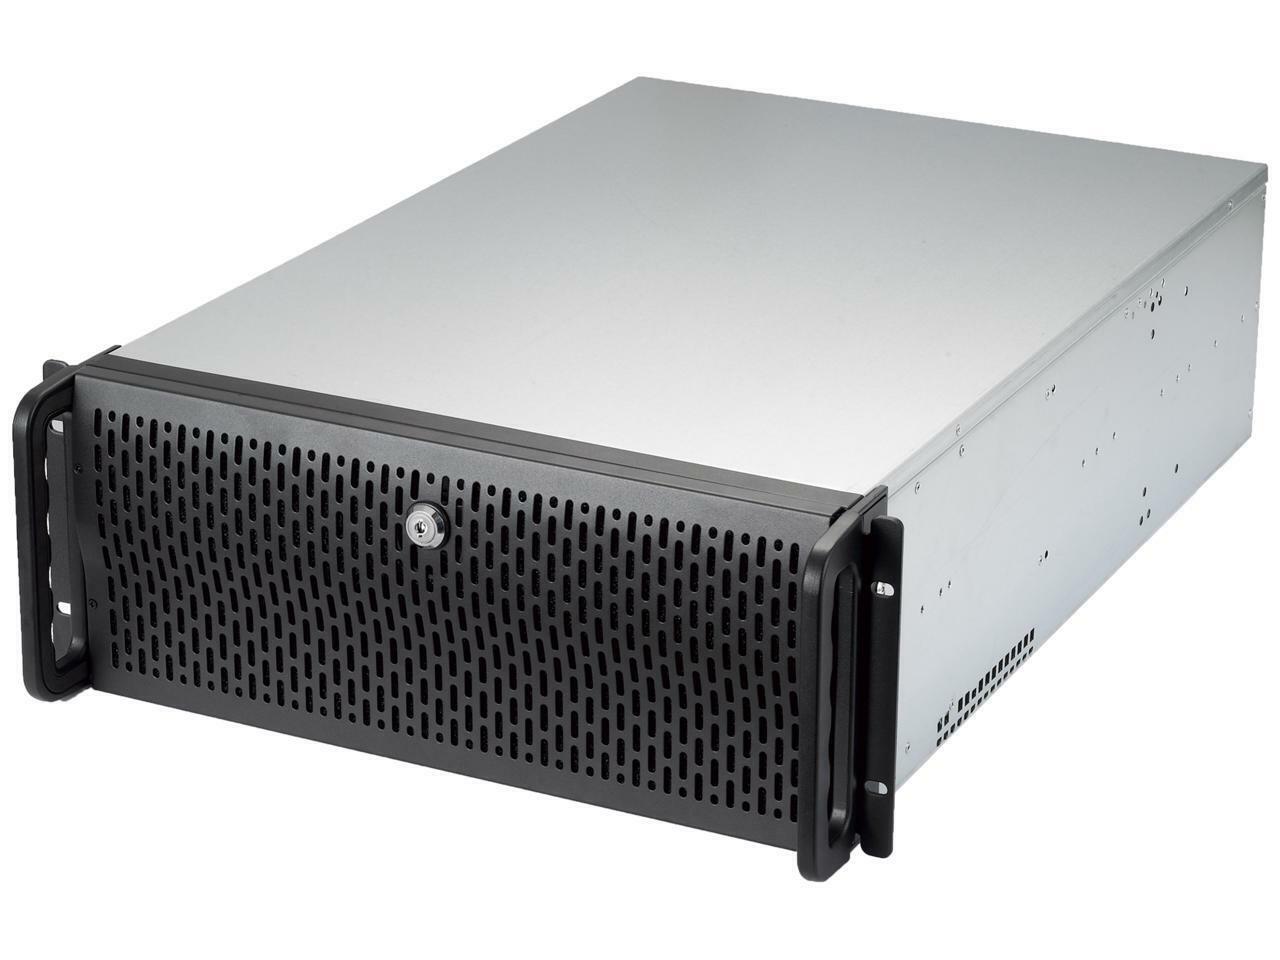 Rosewill RSV-L4500U 4U Server Chassis Rackmount Case | 15 3.5" HDD Bays | E-ATX